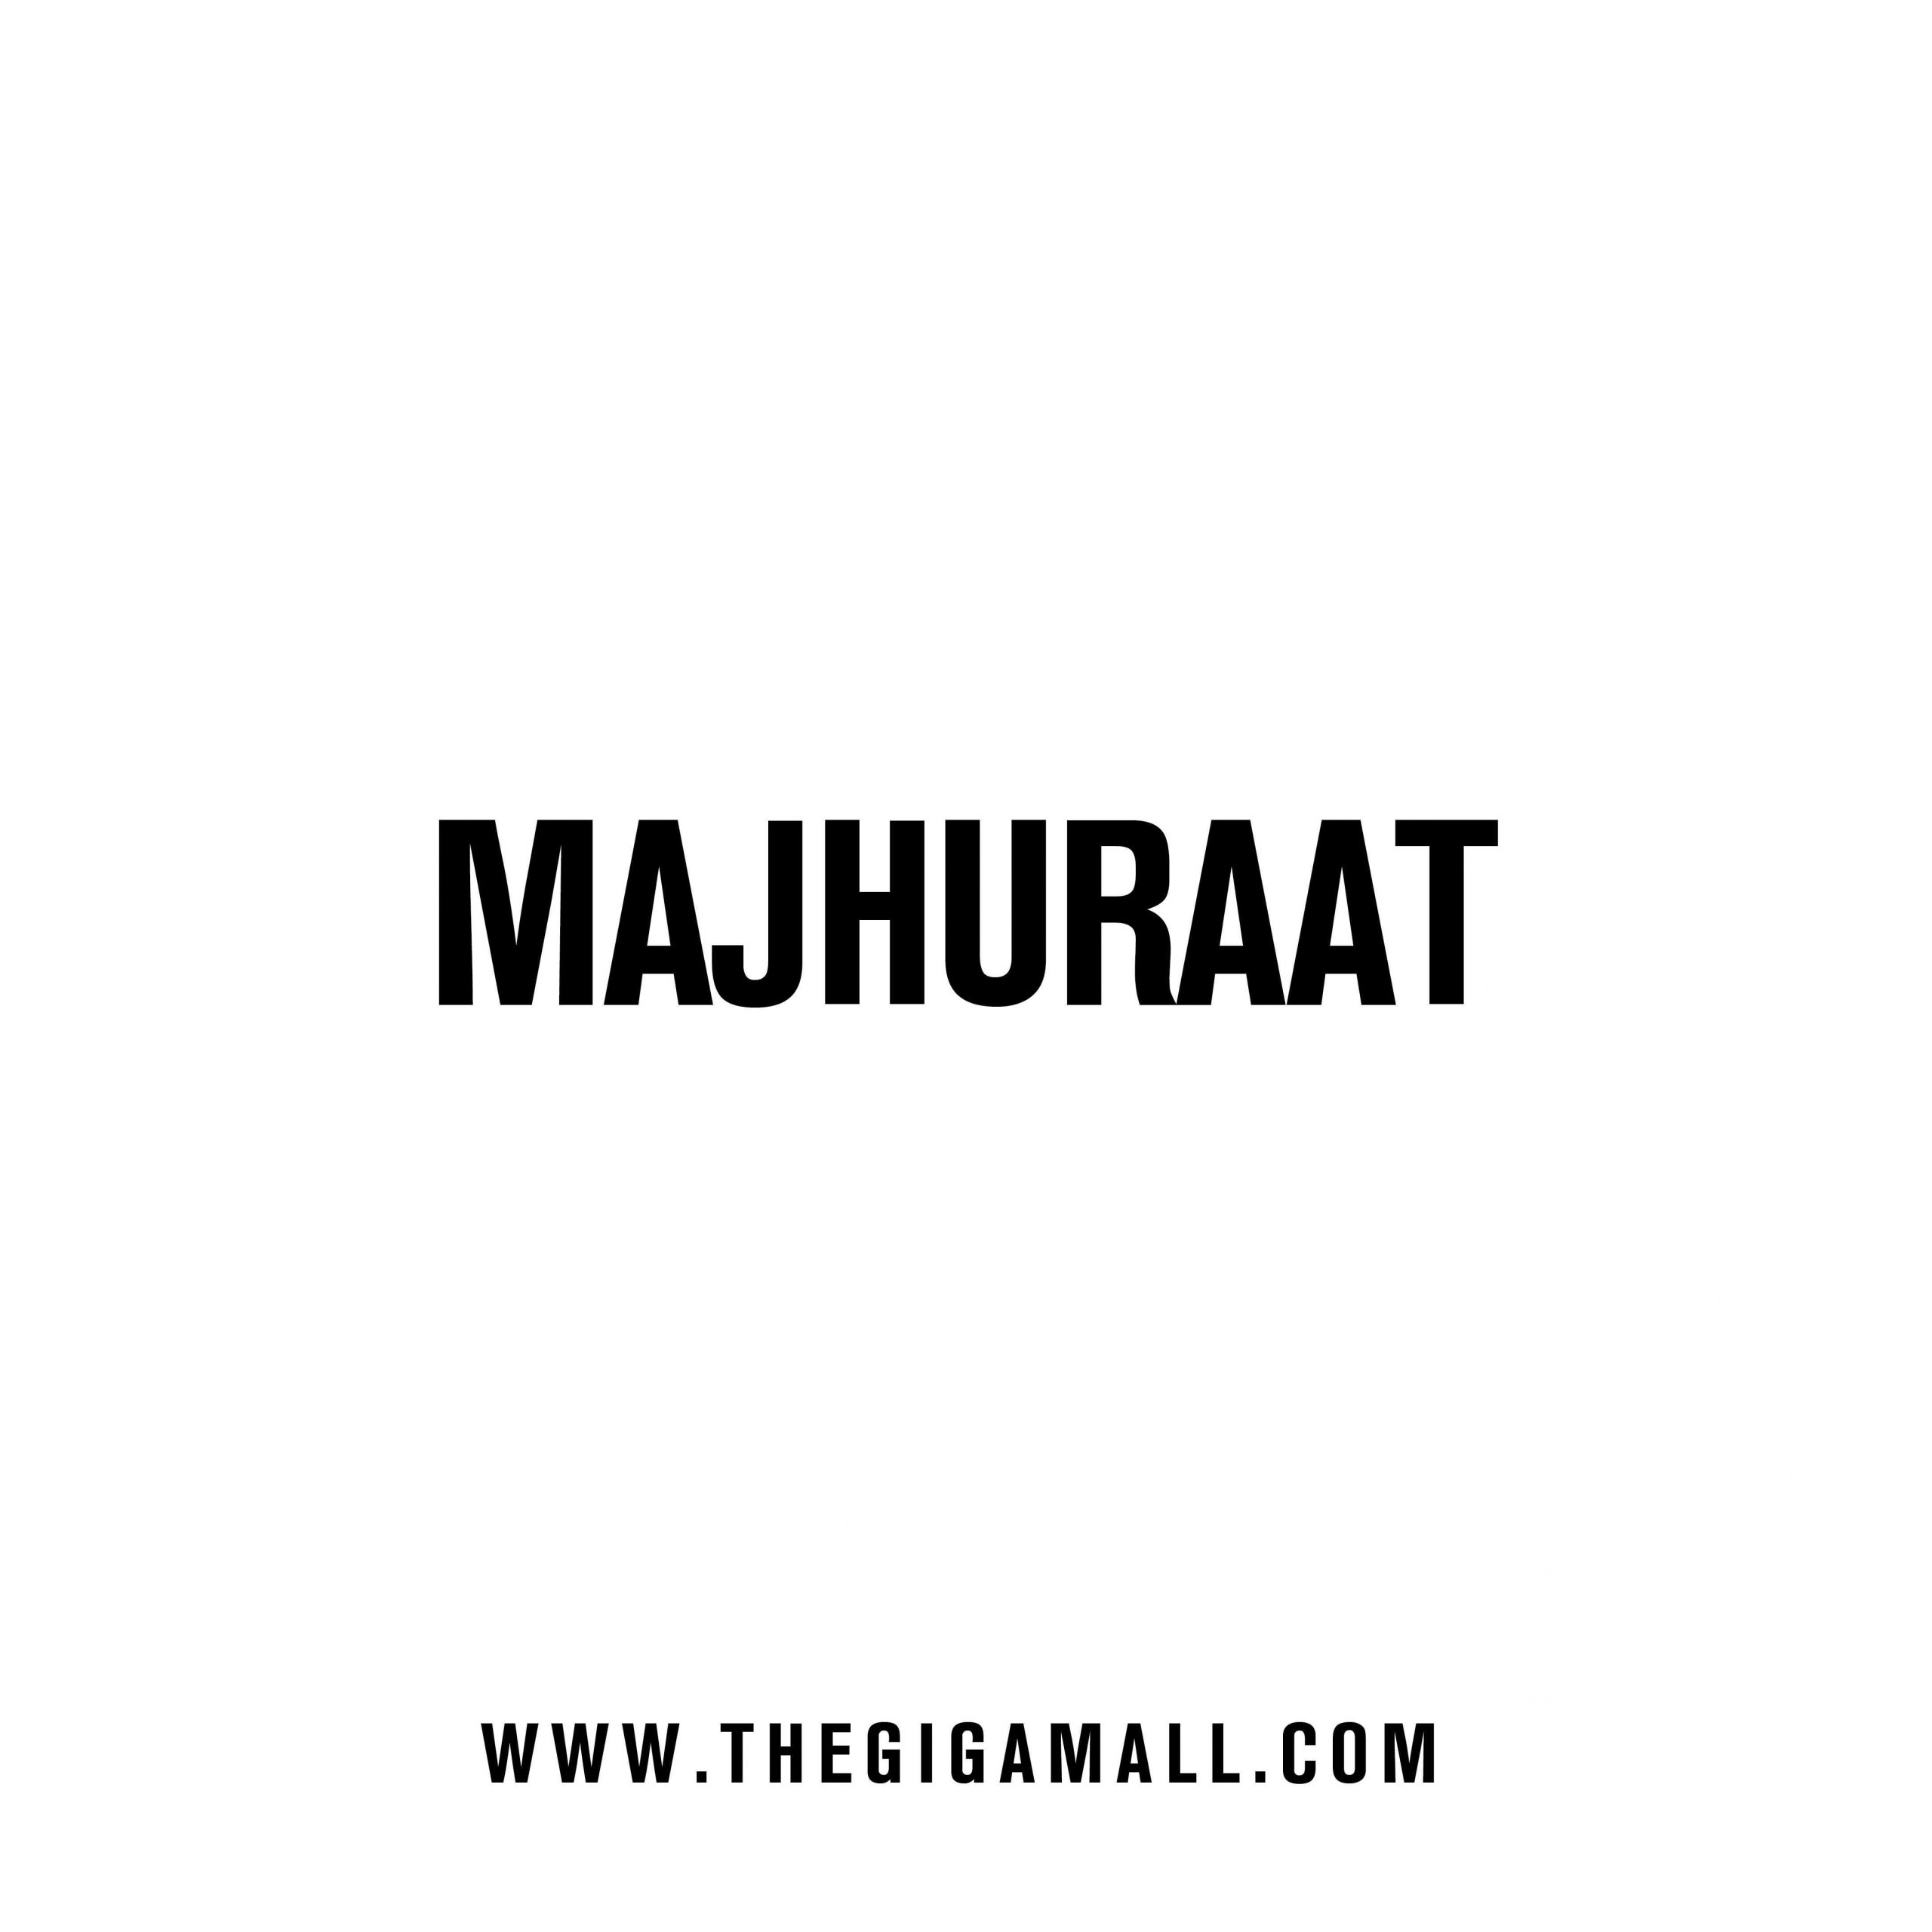 Majhuraat-giga-mall